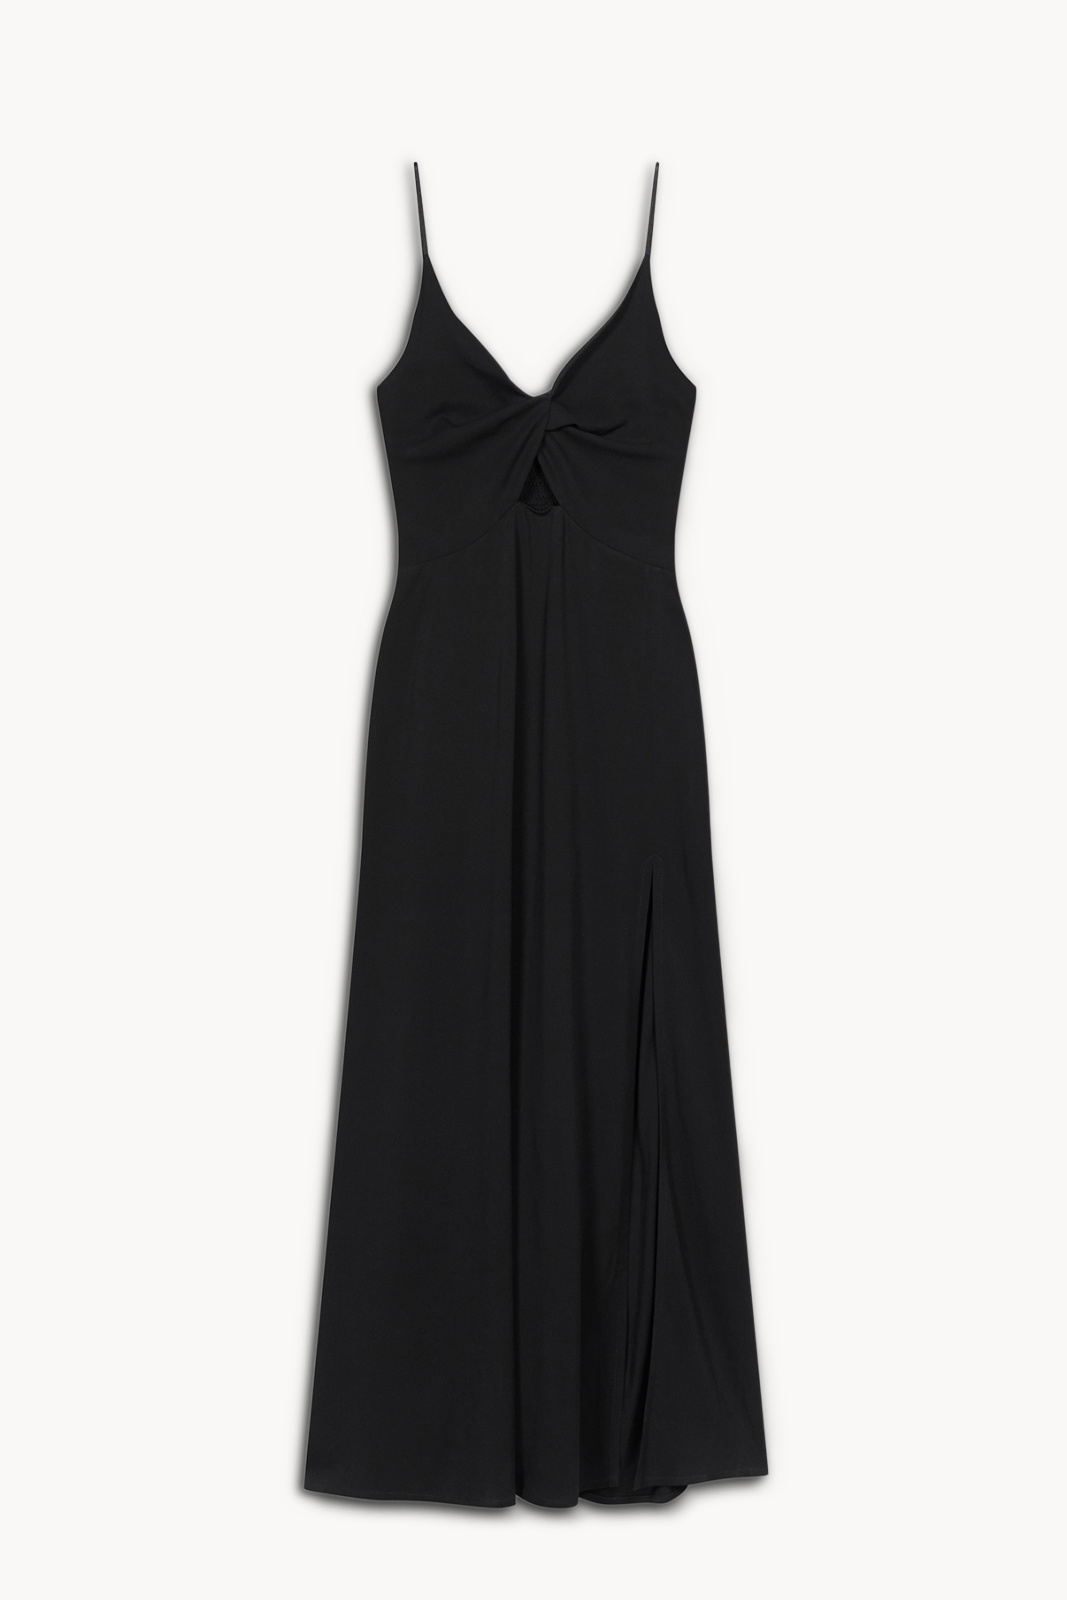 Yusa Dress Black Outlet Elementy